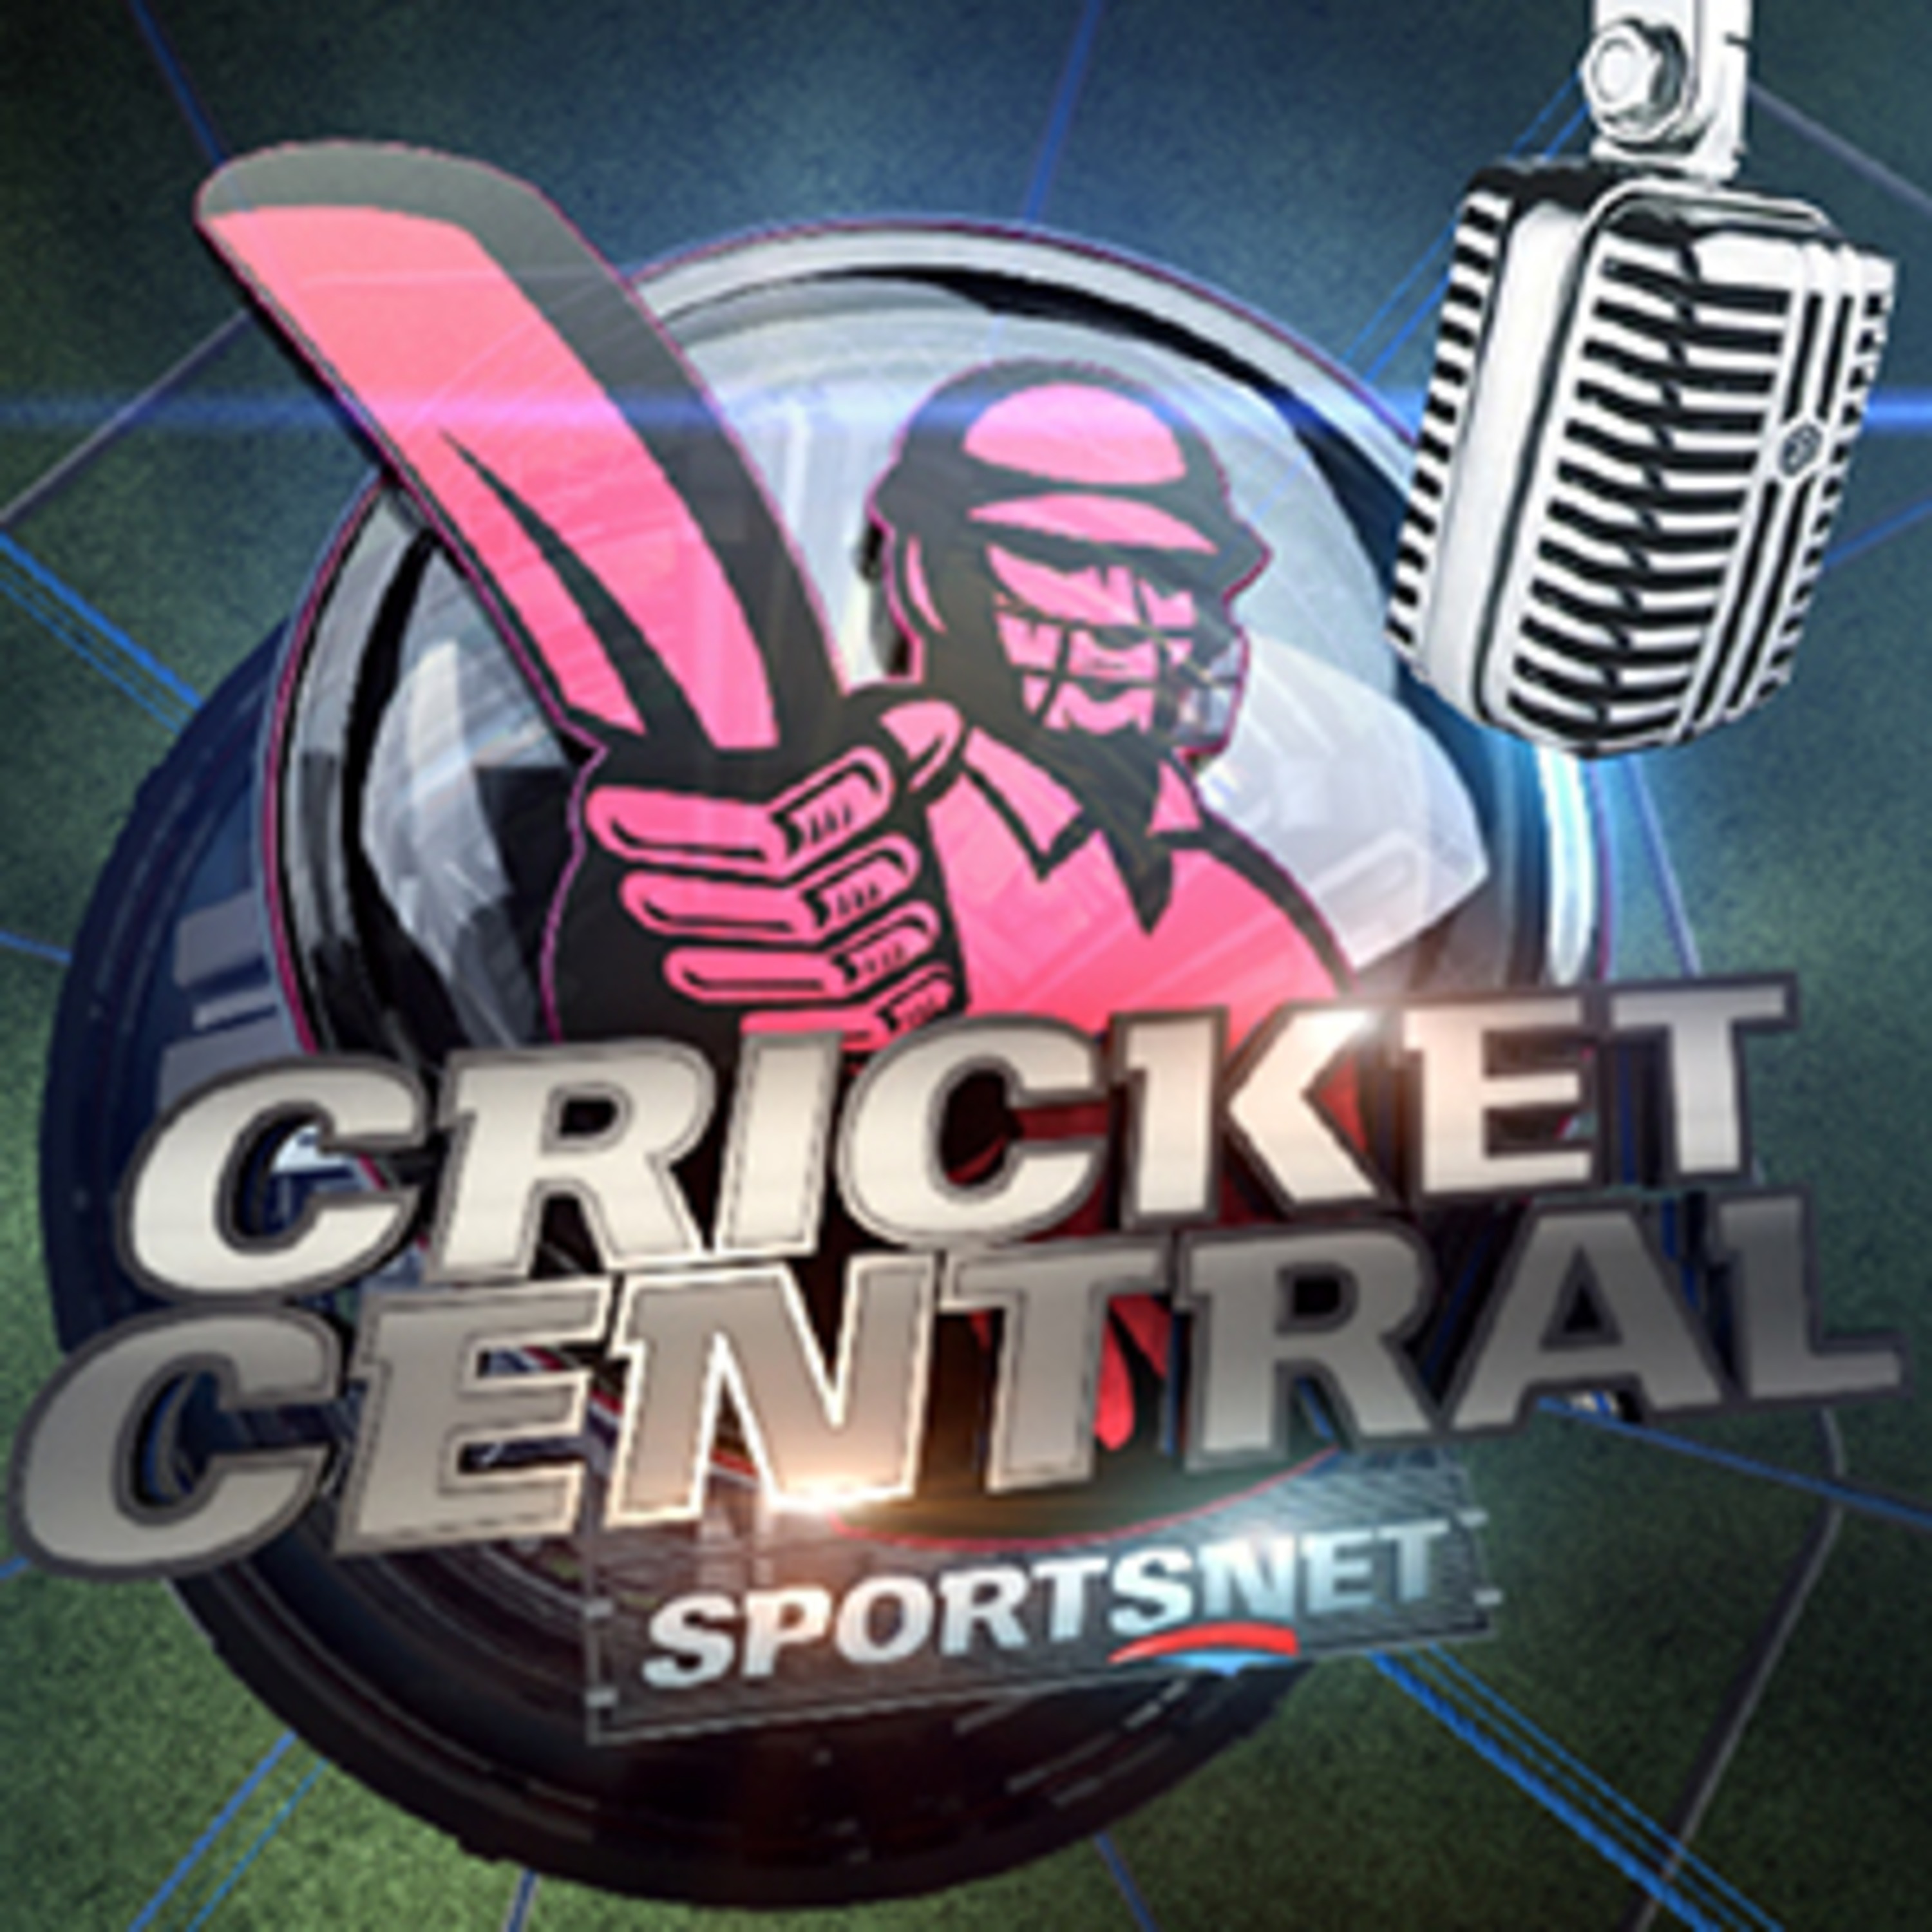 Cricket Central